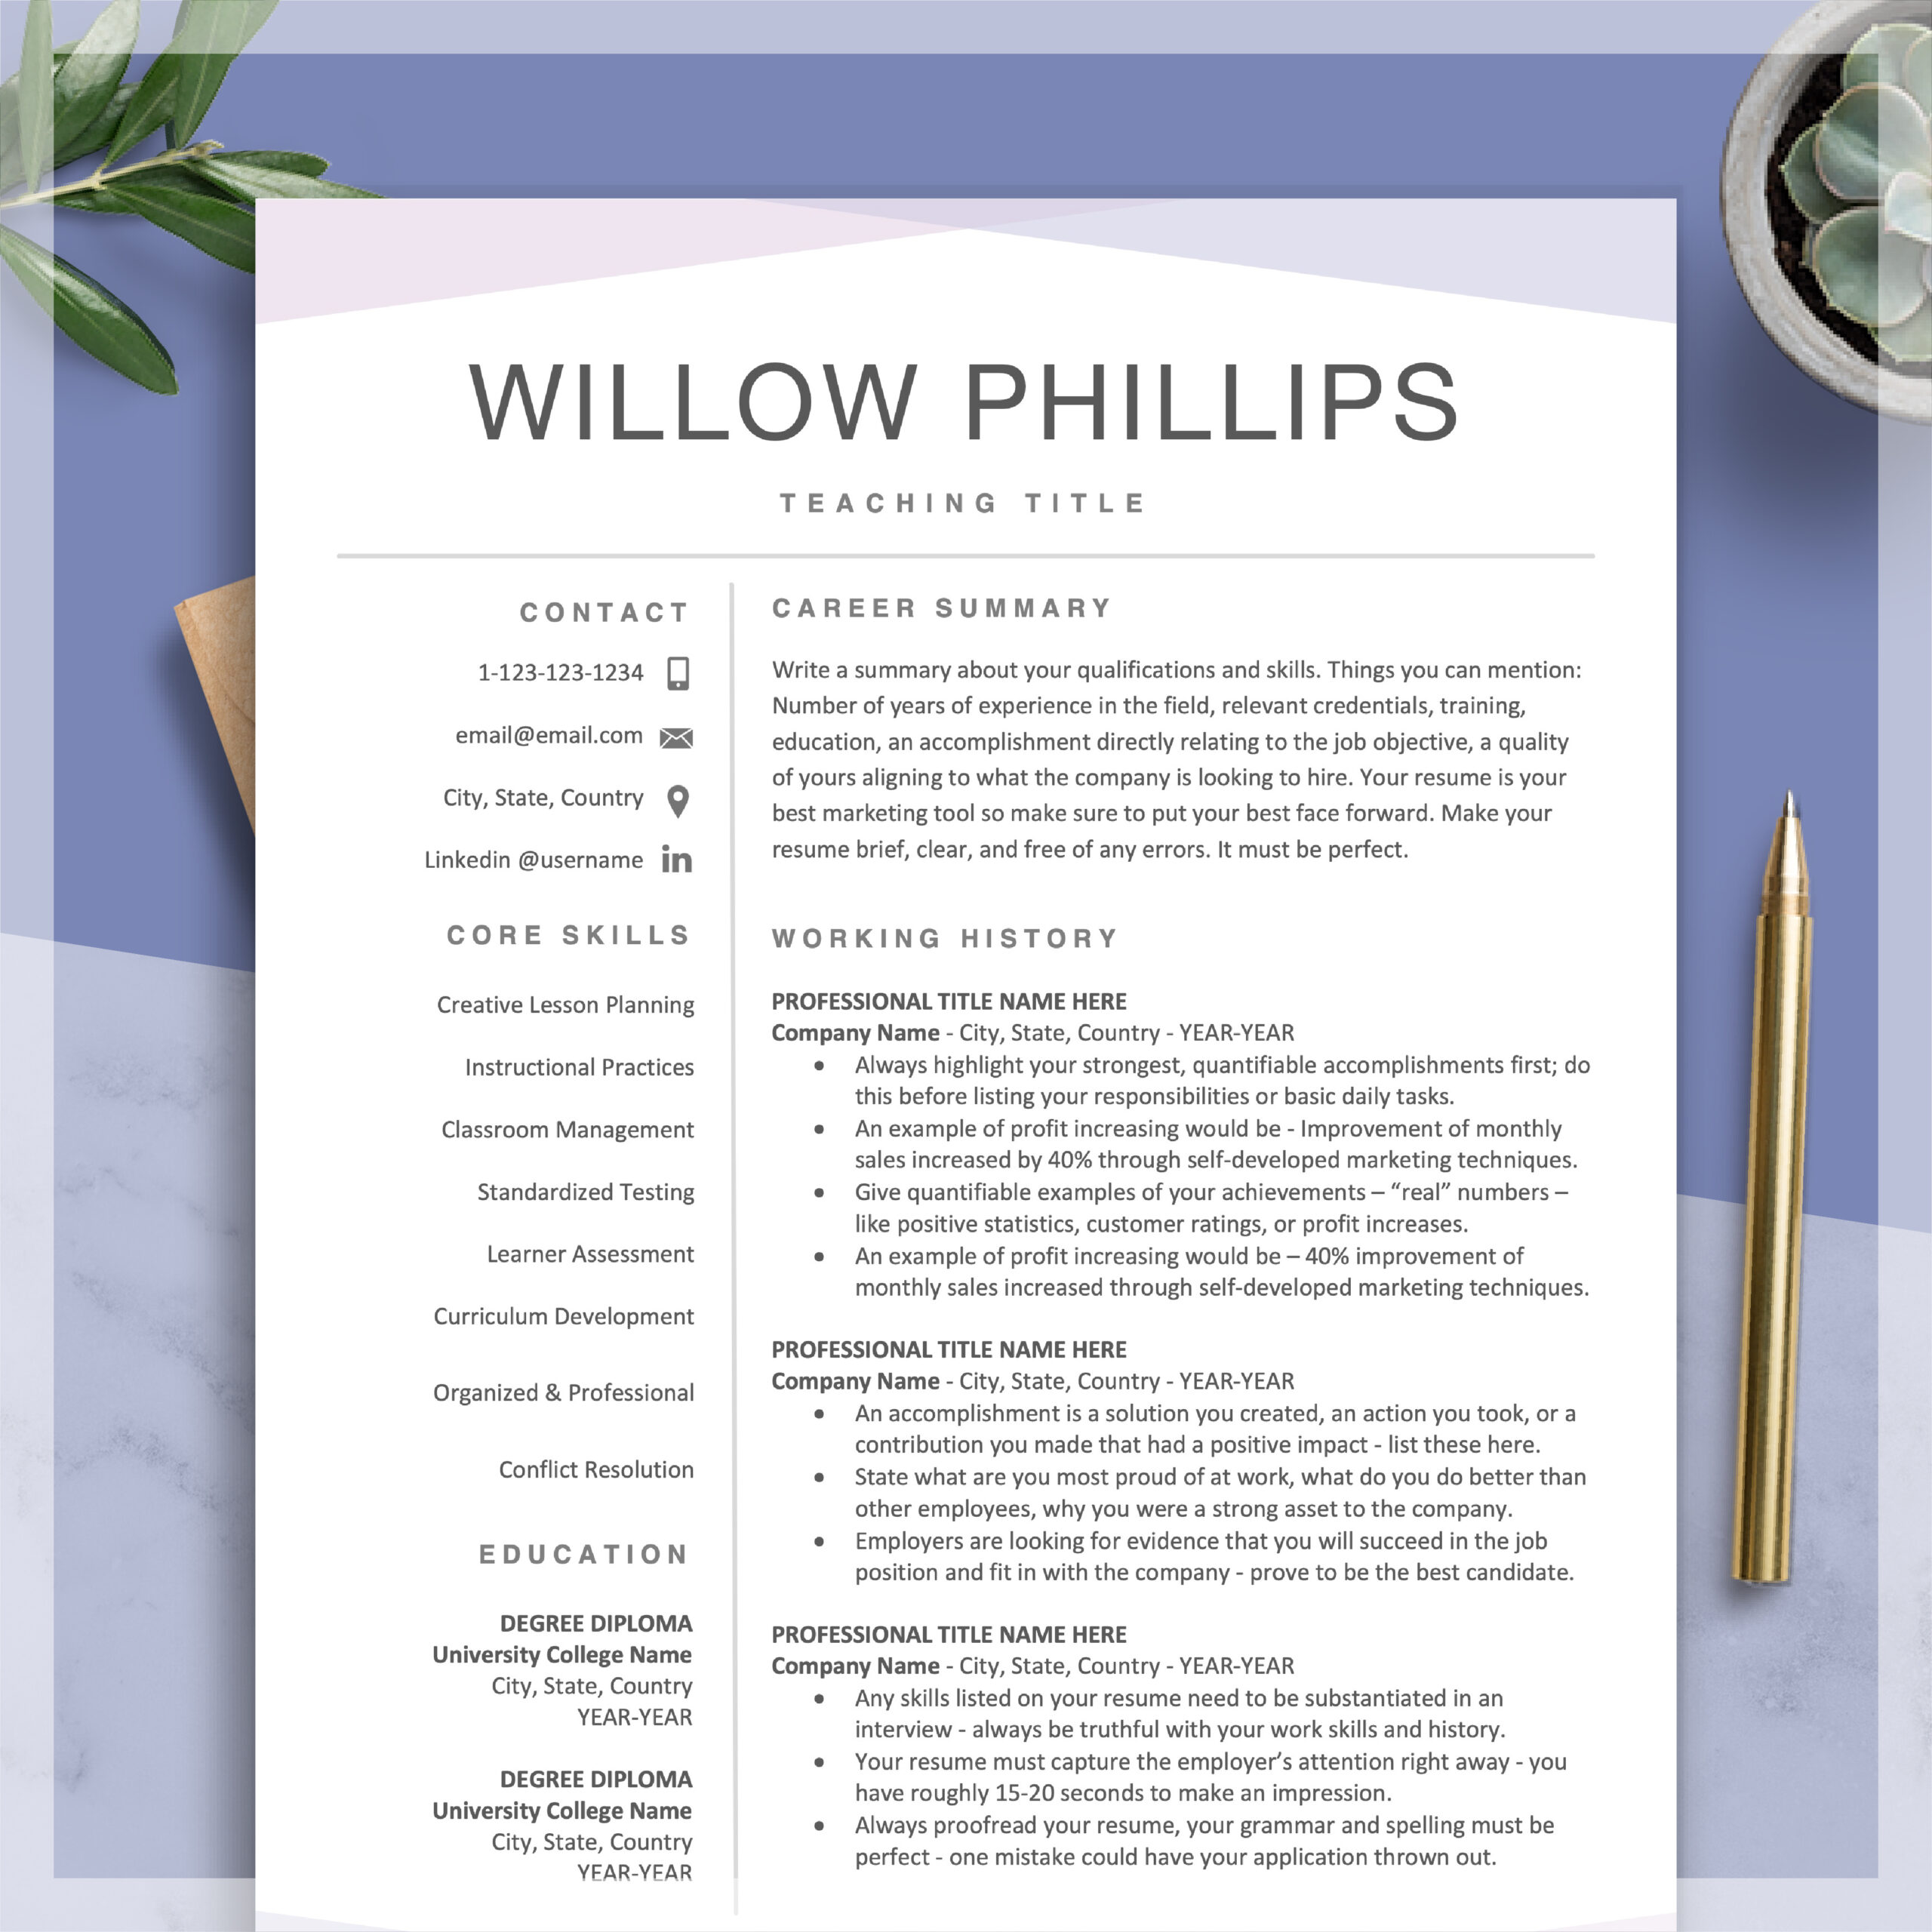 Willow Phillips 2